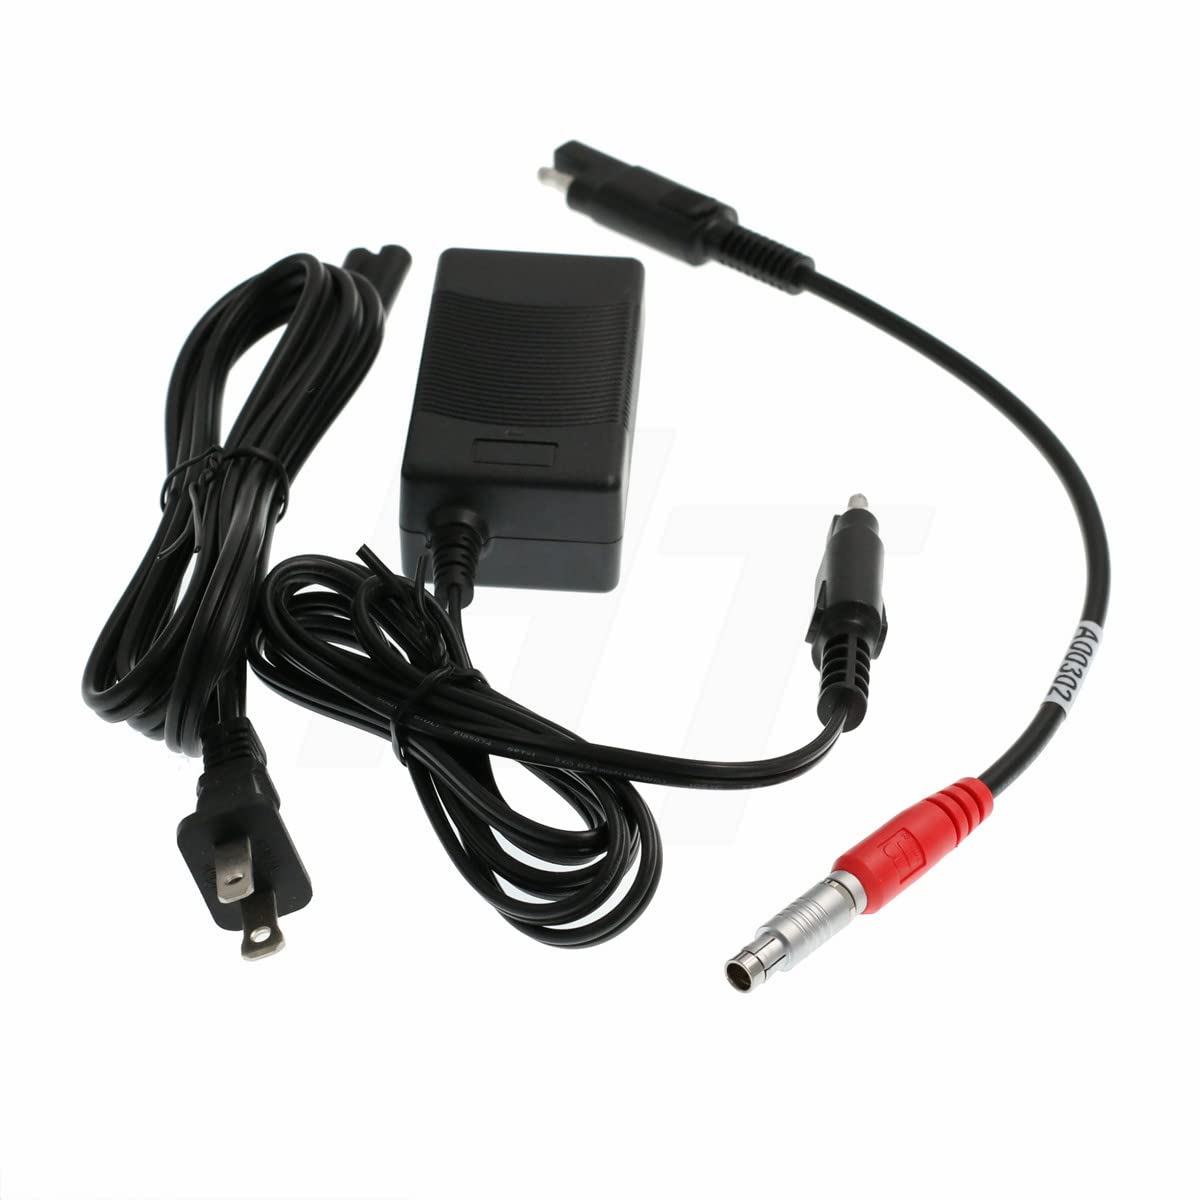 HangTon AC DC Adapter Power Supply 5 Pin for Topcon GPS Receiver HiPer V Pro VR II Lite Legacy GB500 GB1000 GR-3 GR5